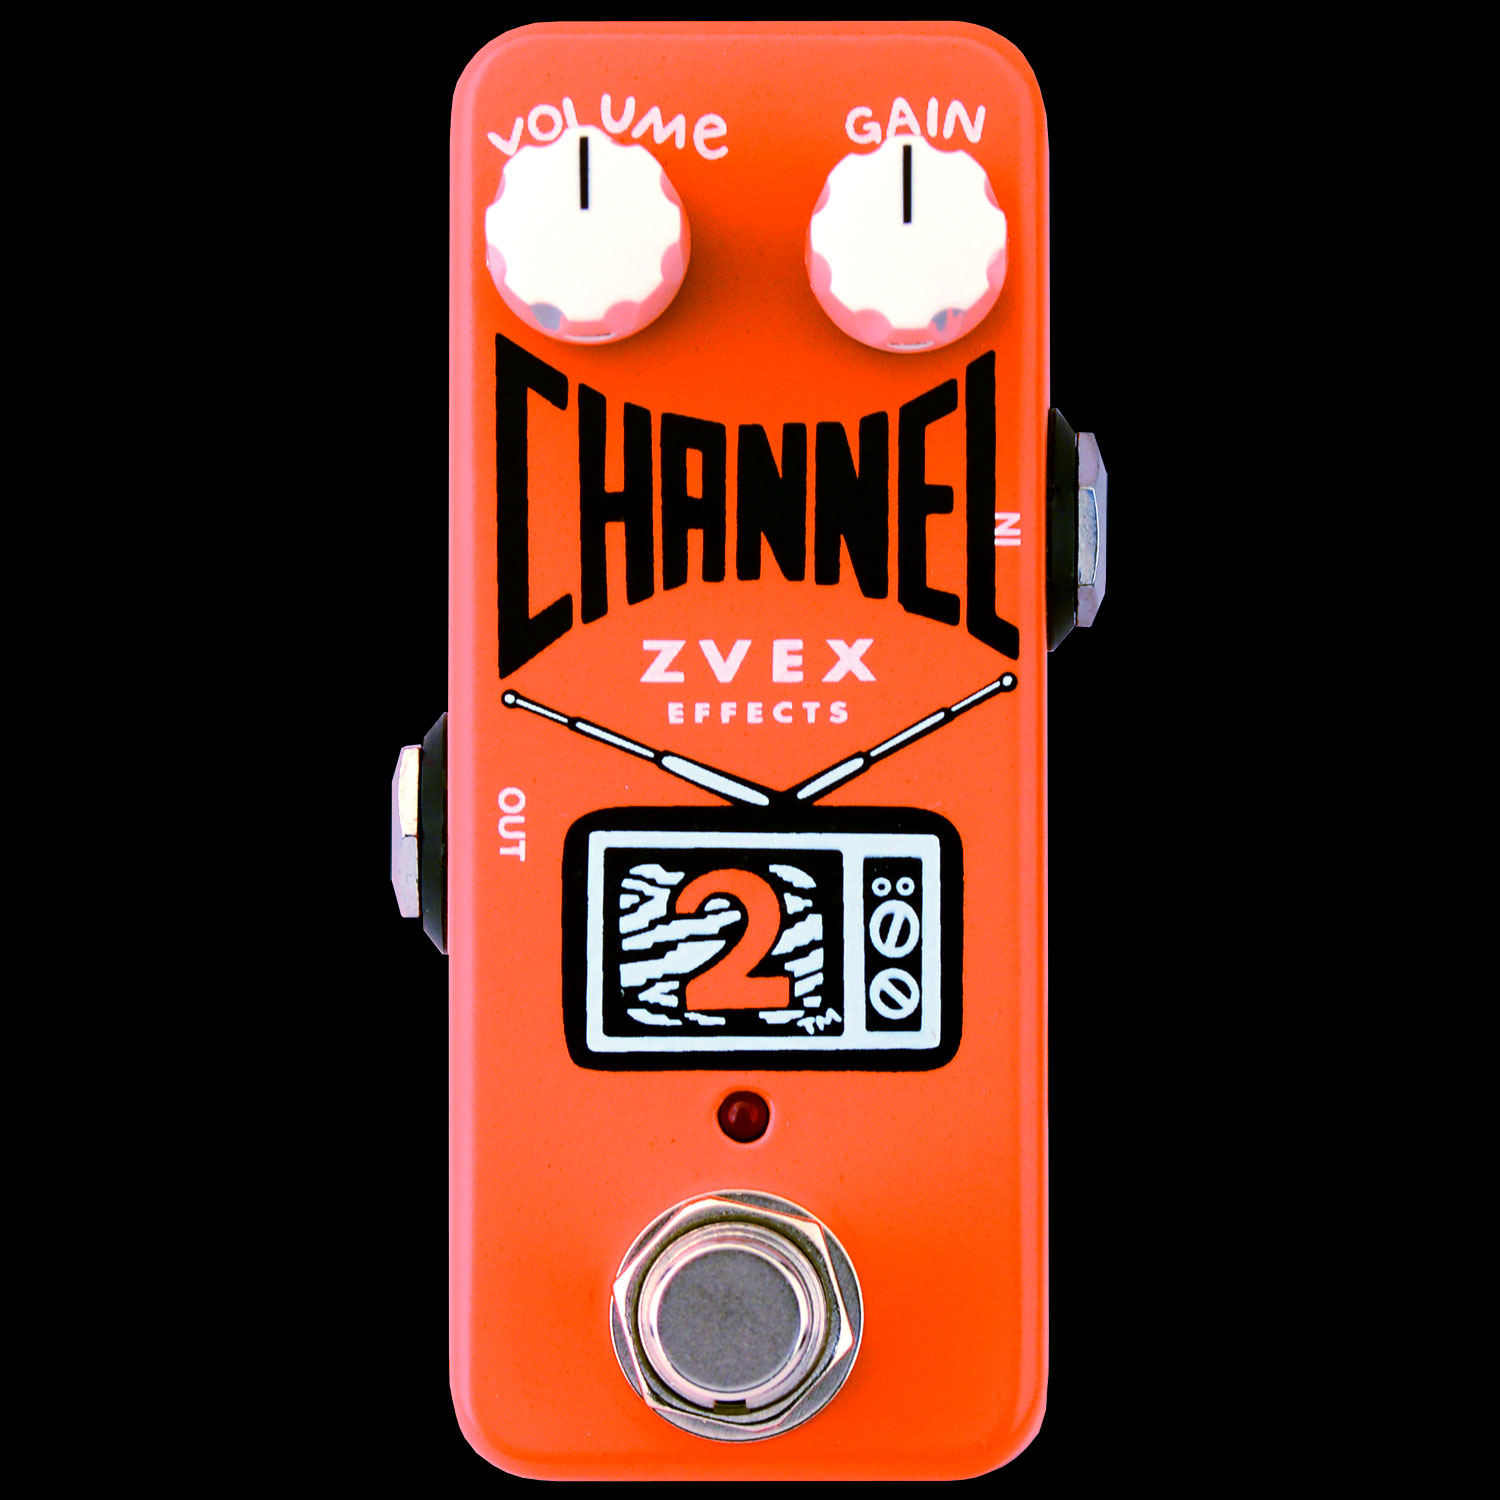 Channel 2 — ZVEX Effects